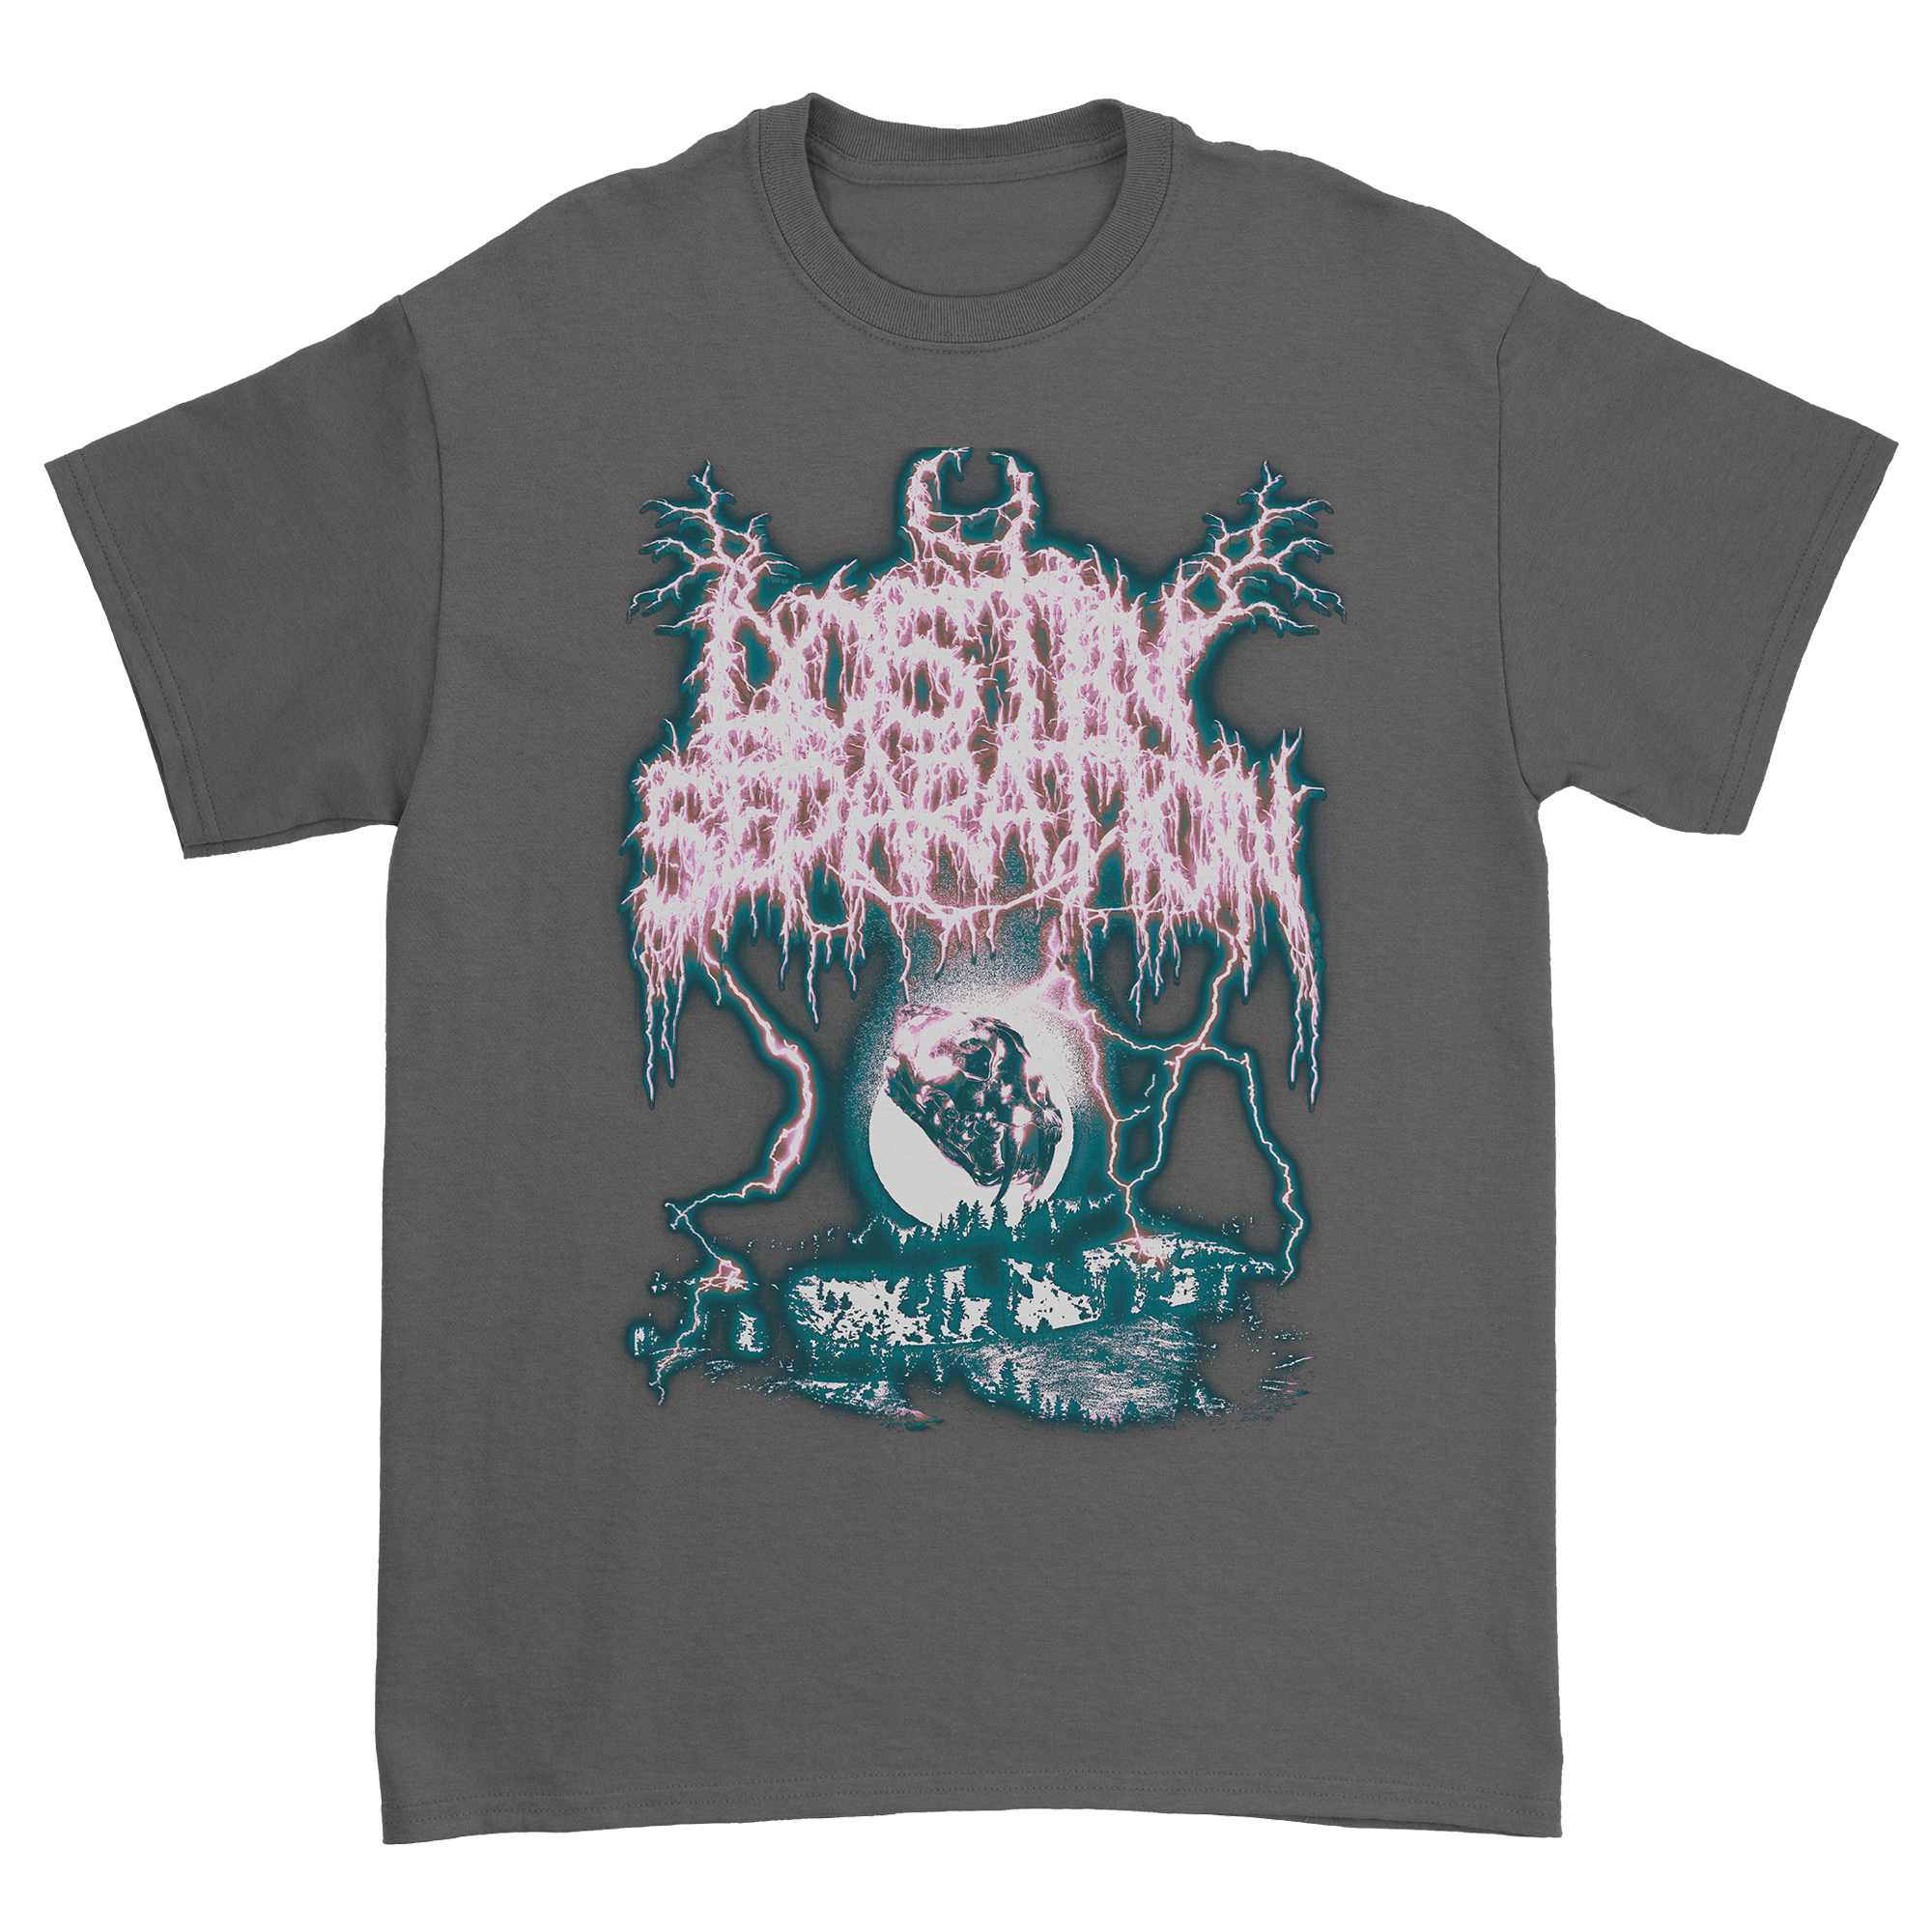 Lost In Separation - Metal T-Shirt (Pre-Order)